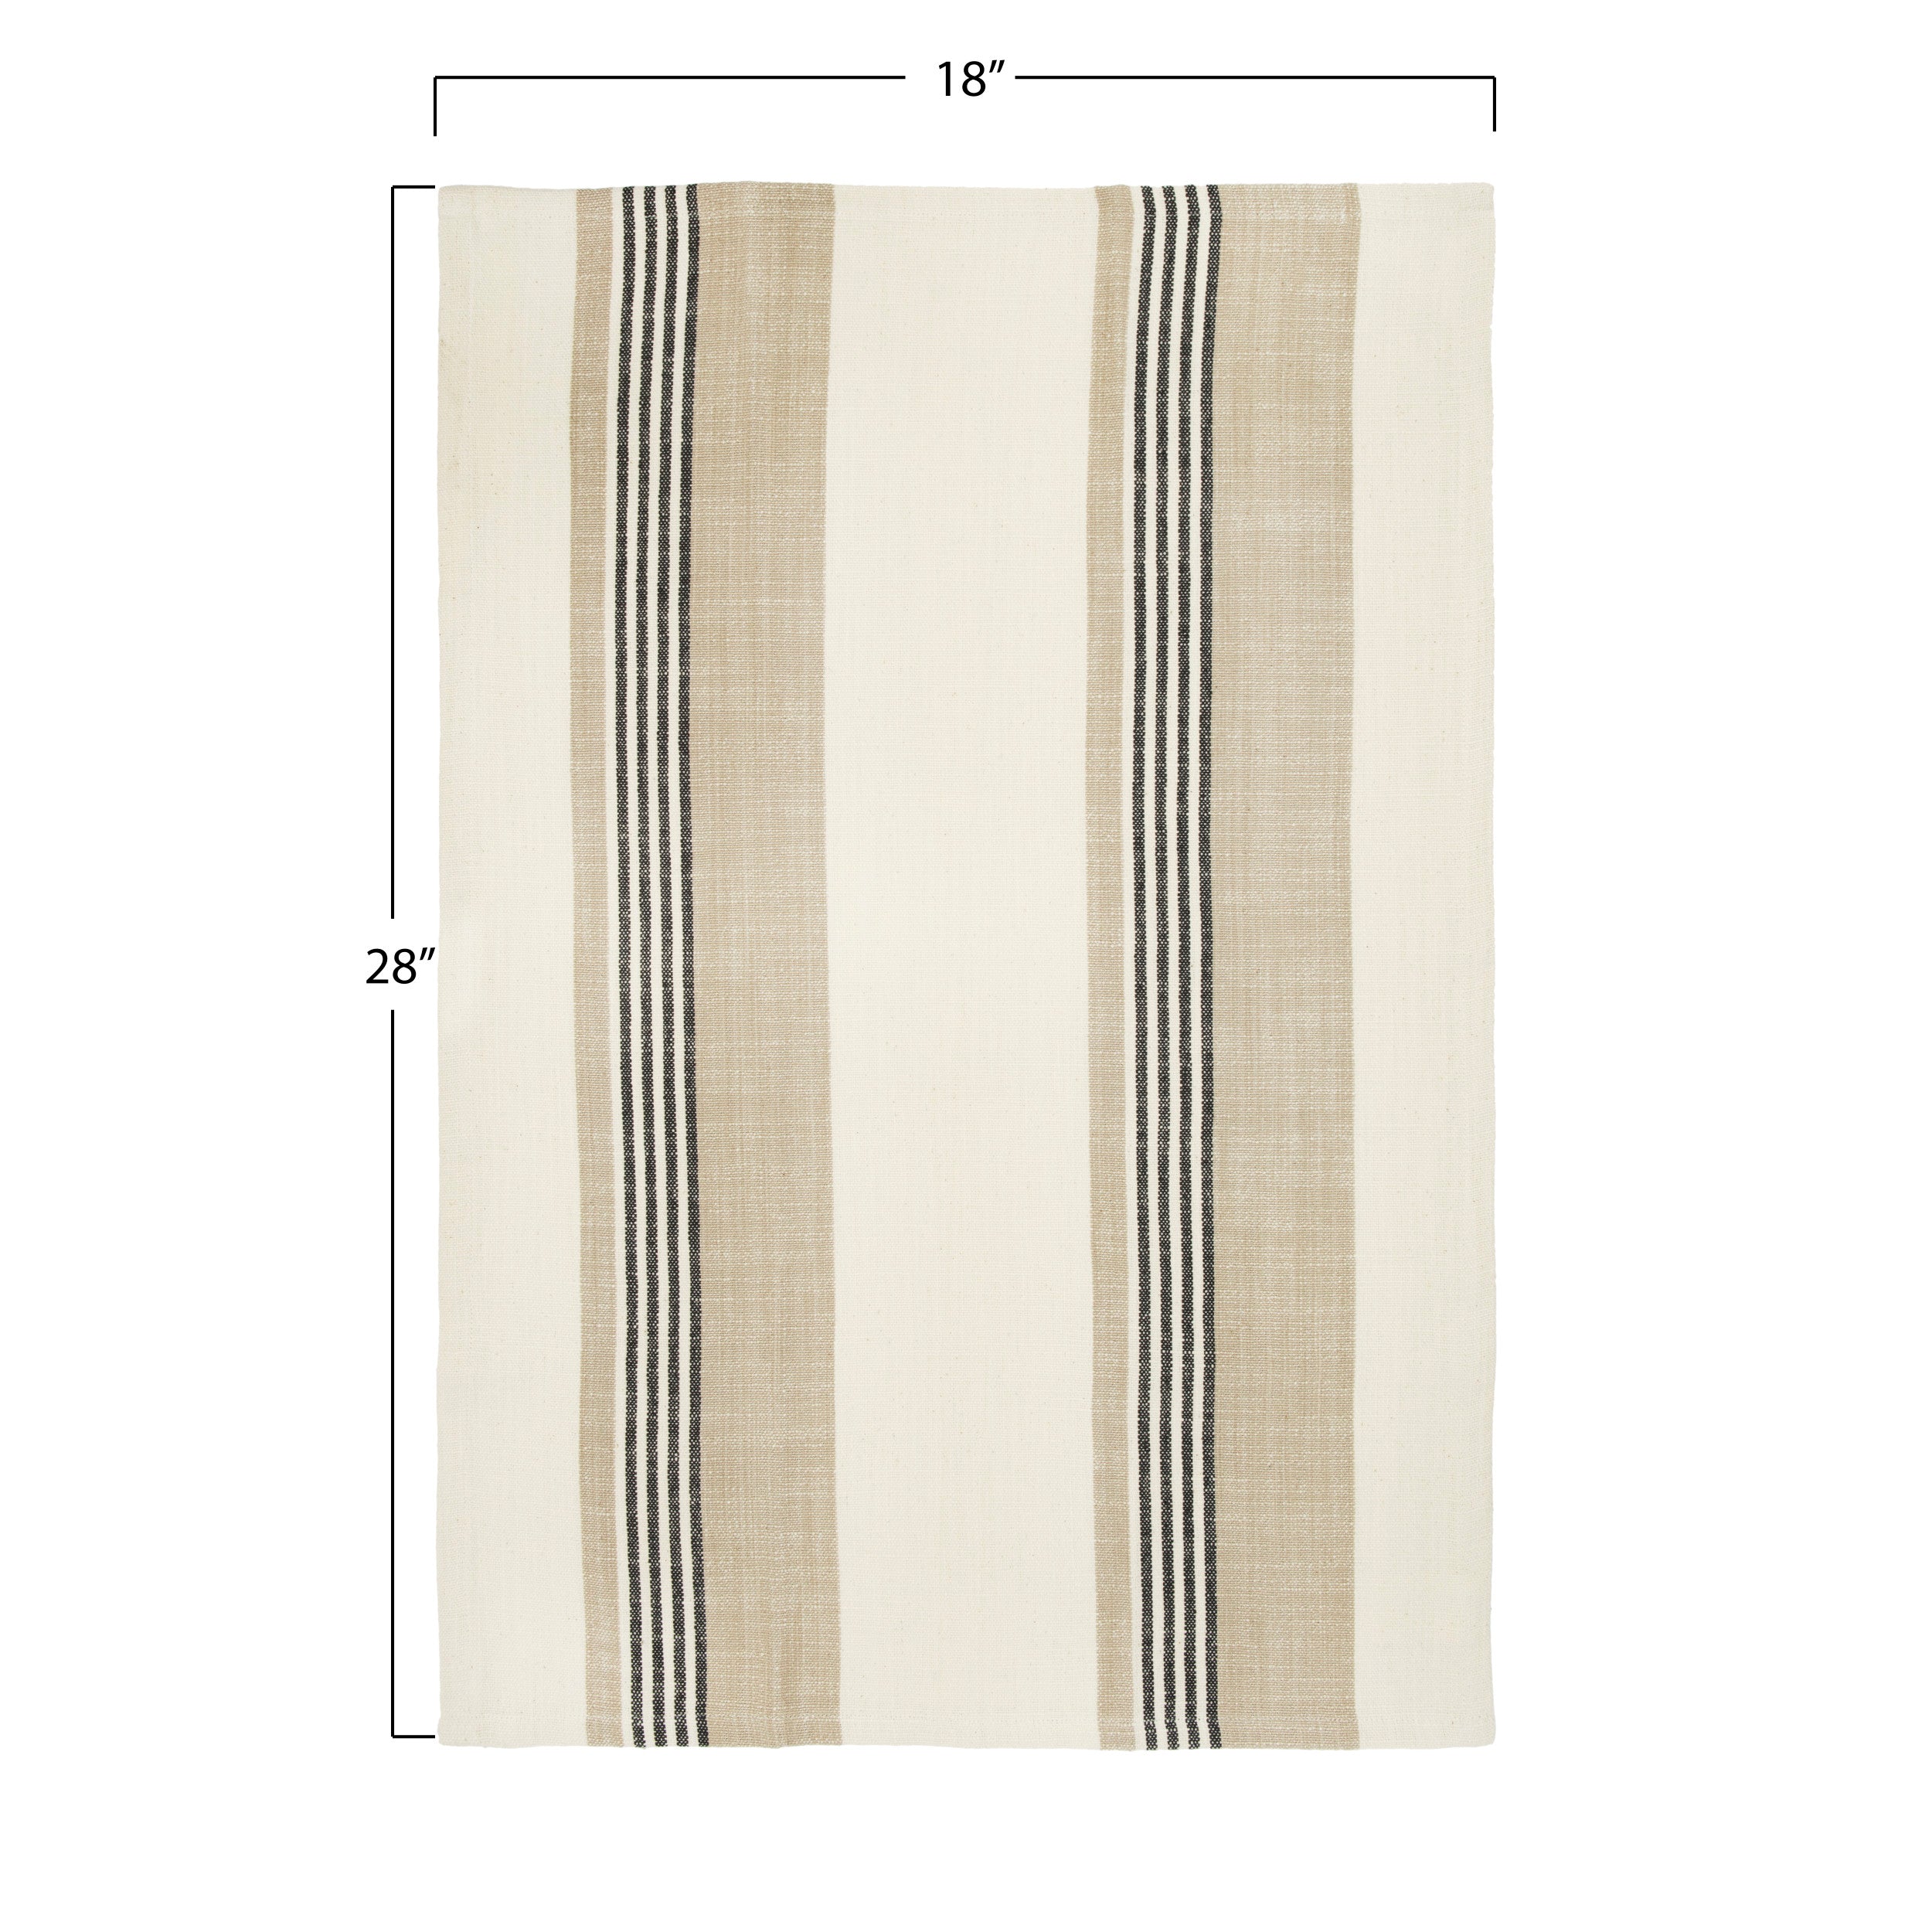 Woven Cotton Striped Tea Towel Set